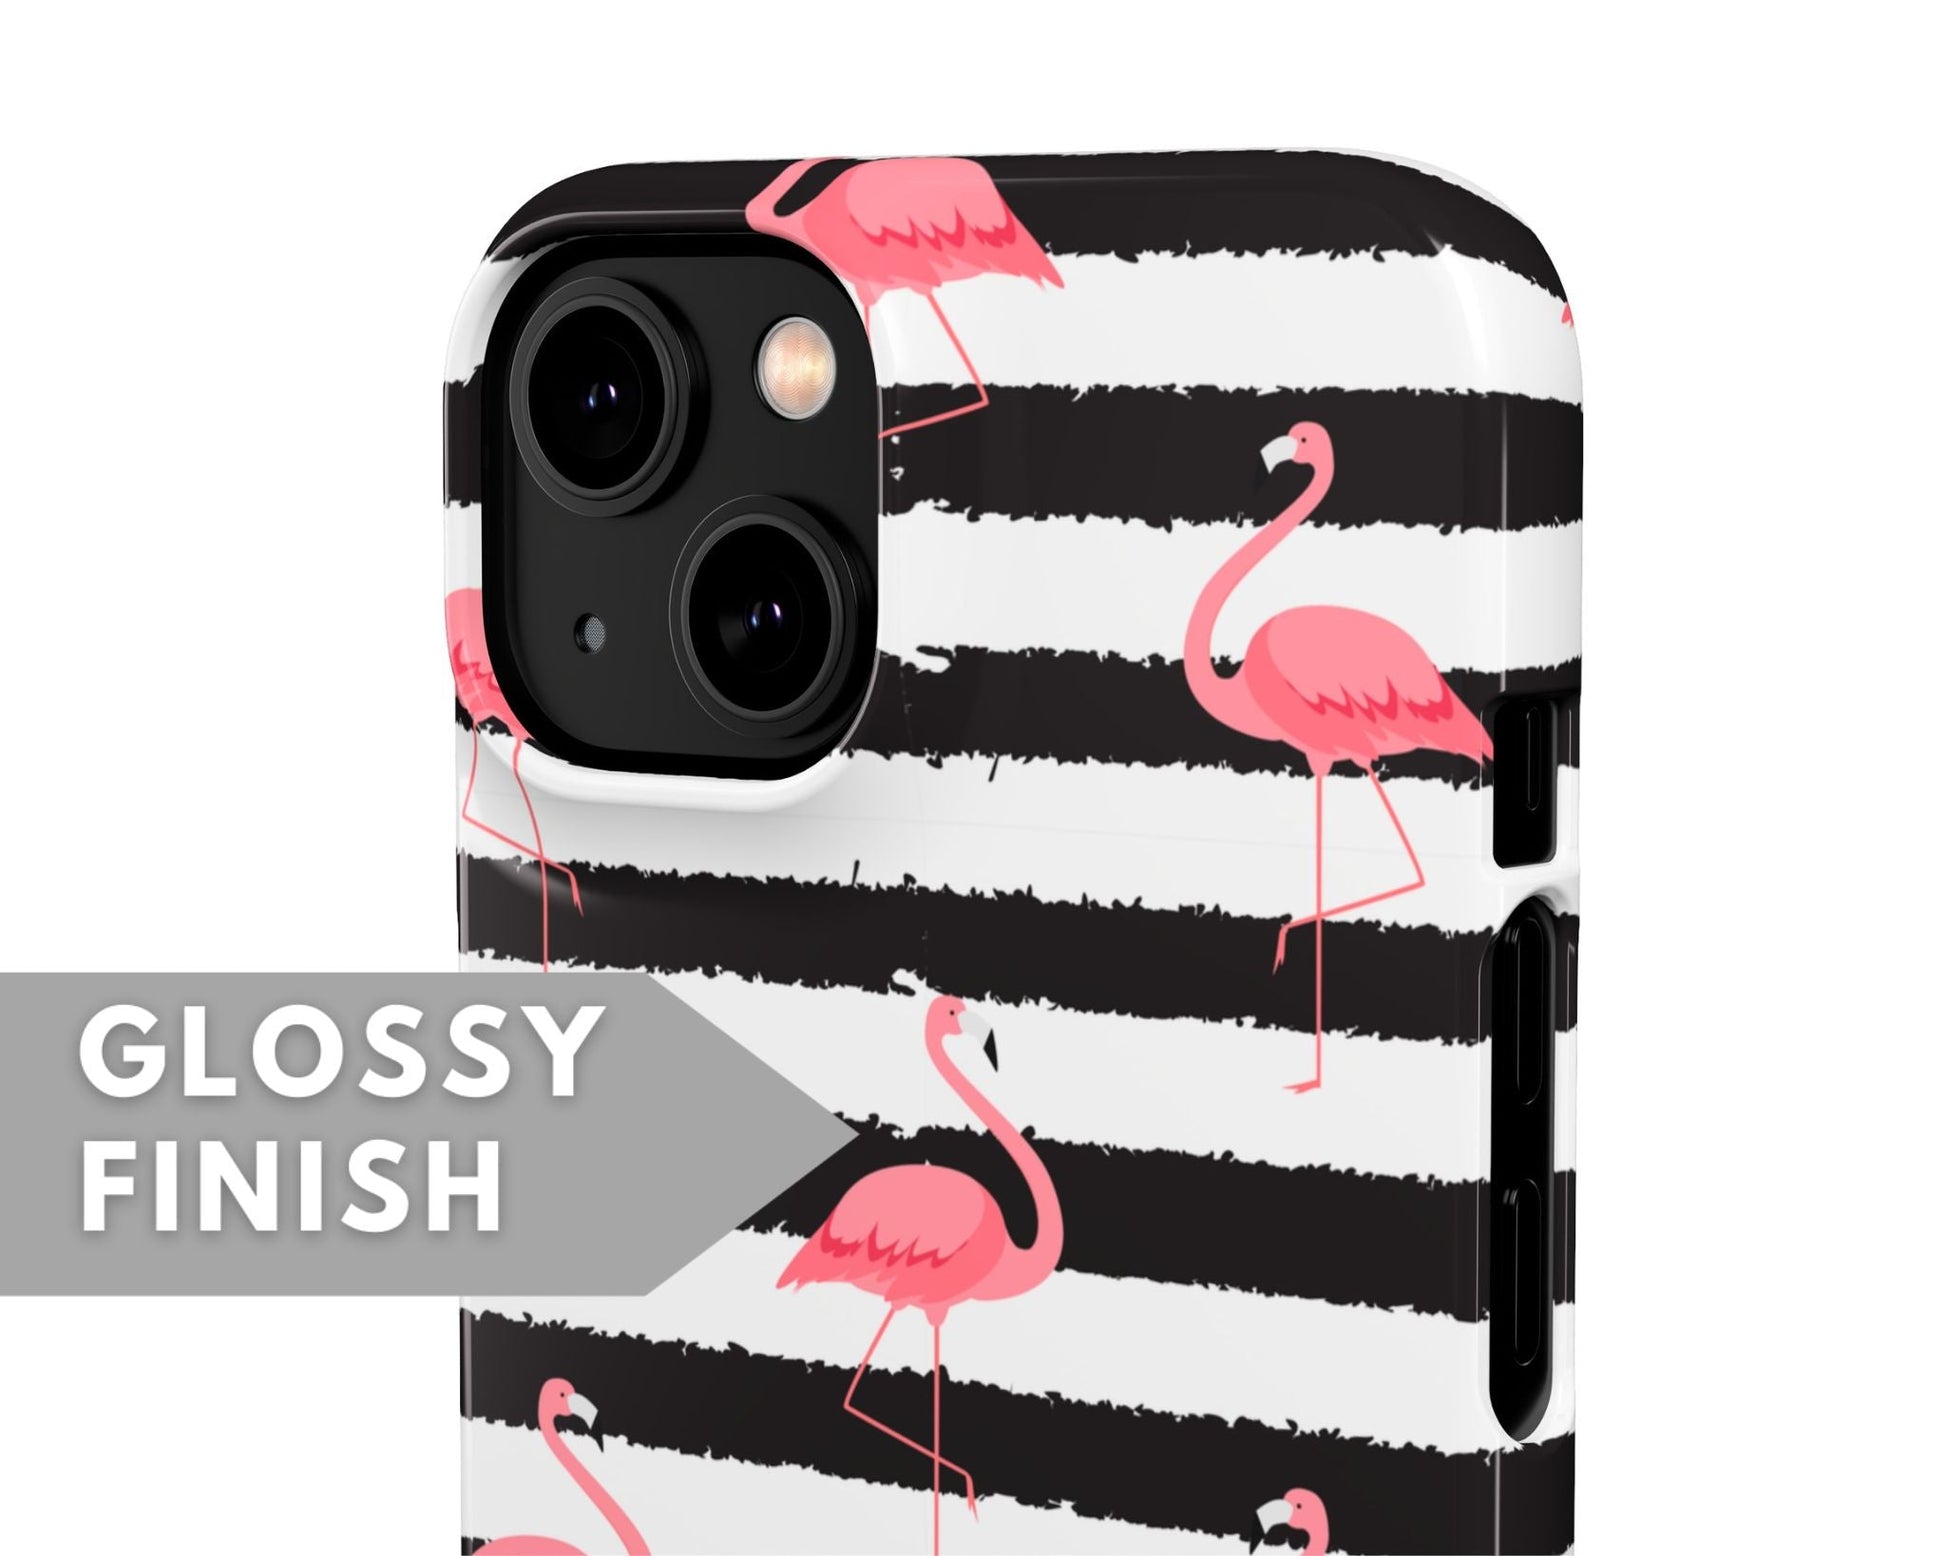 Striped Flamingos Snap Case - Classy Cases